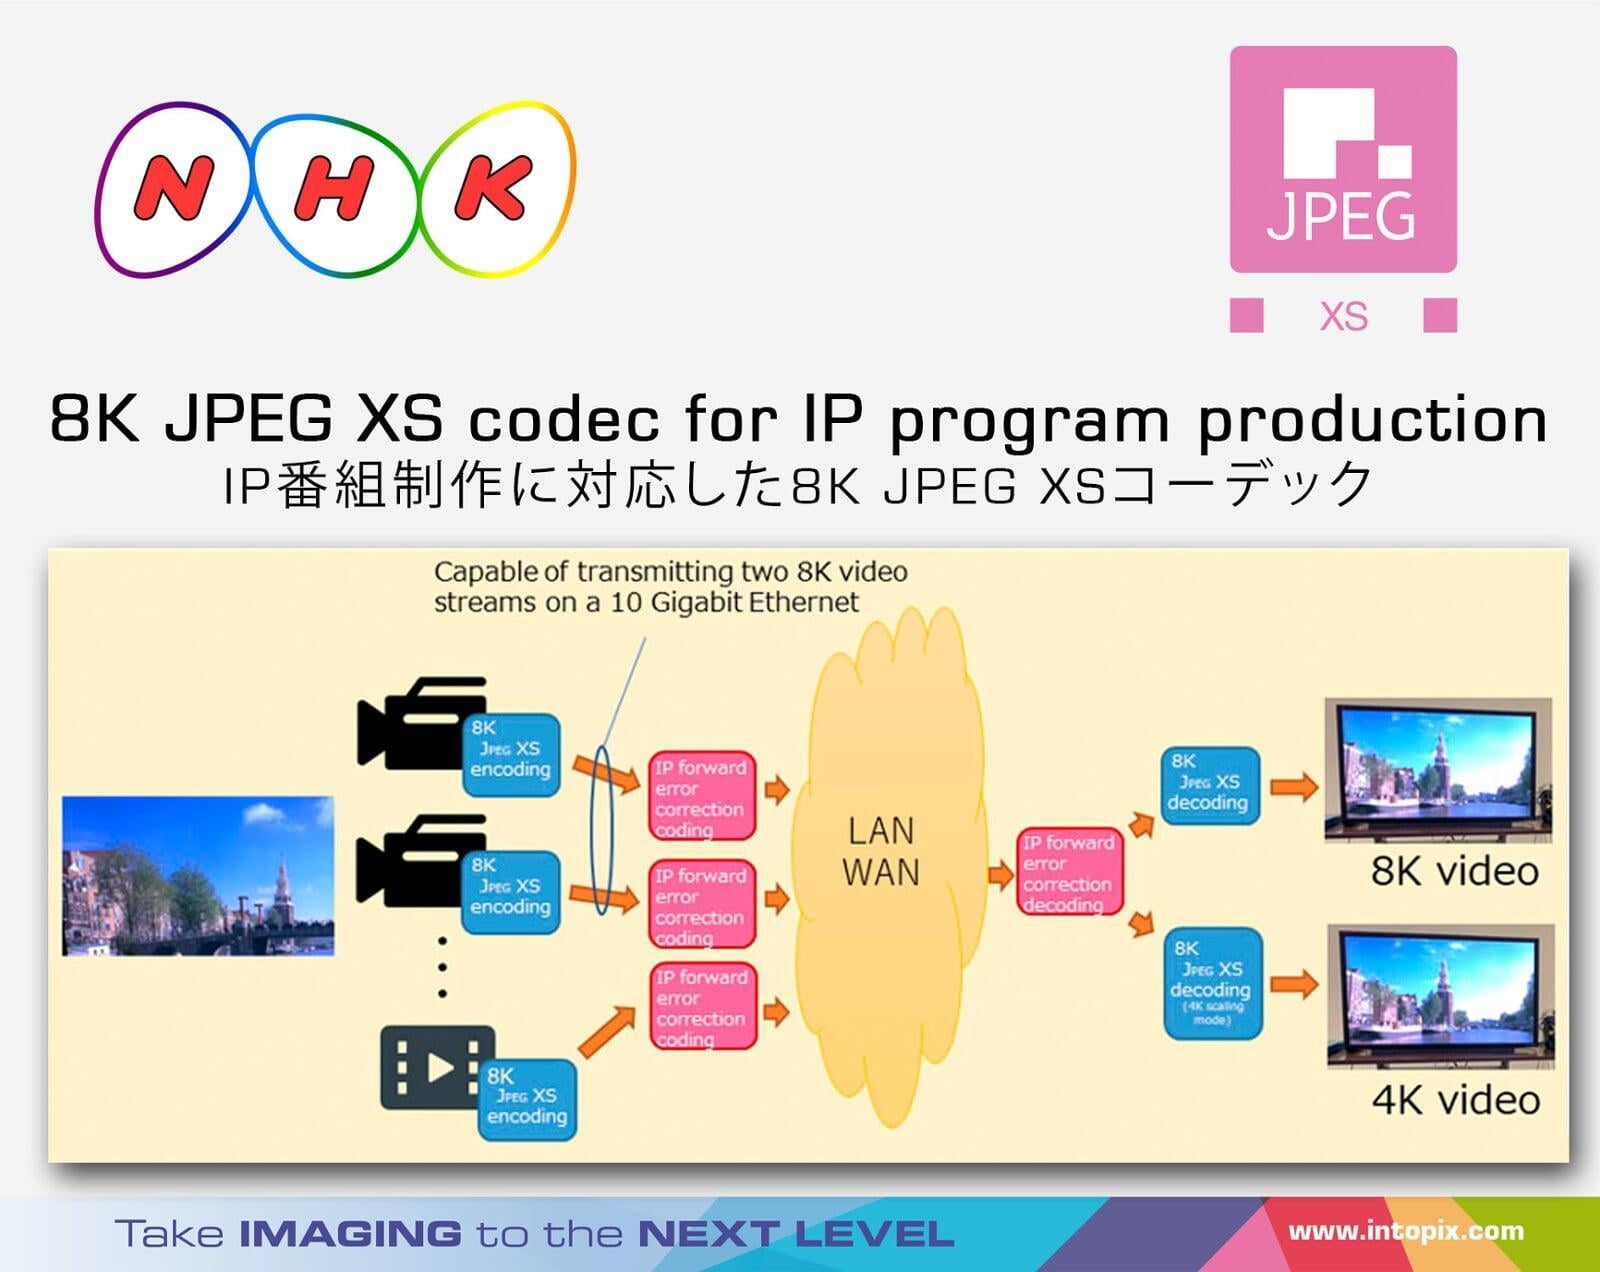 Village Island 코덱을 사용한 라이브 프로덕션 용 8K JPEG XS 코덱 소개